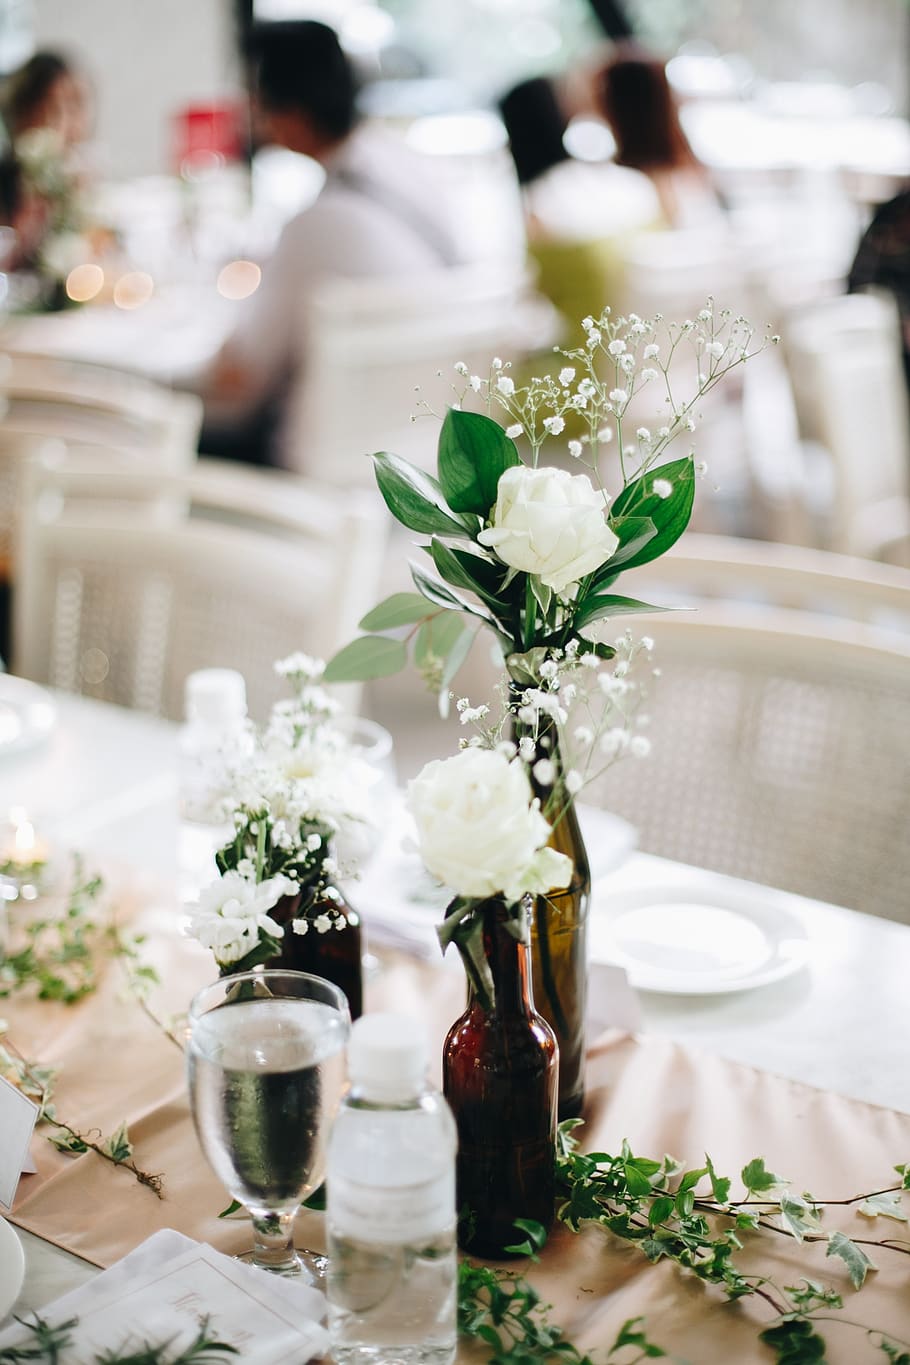 reception, celebration, wedding, decoration, flower, flowering plant, table, event, plant, incidental people